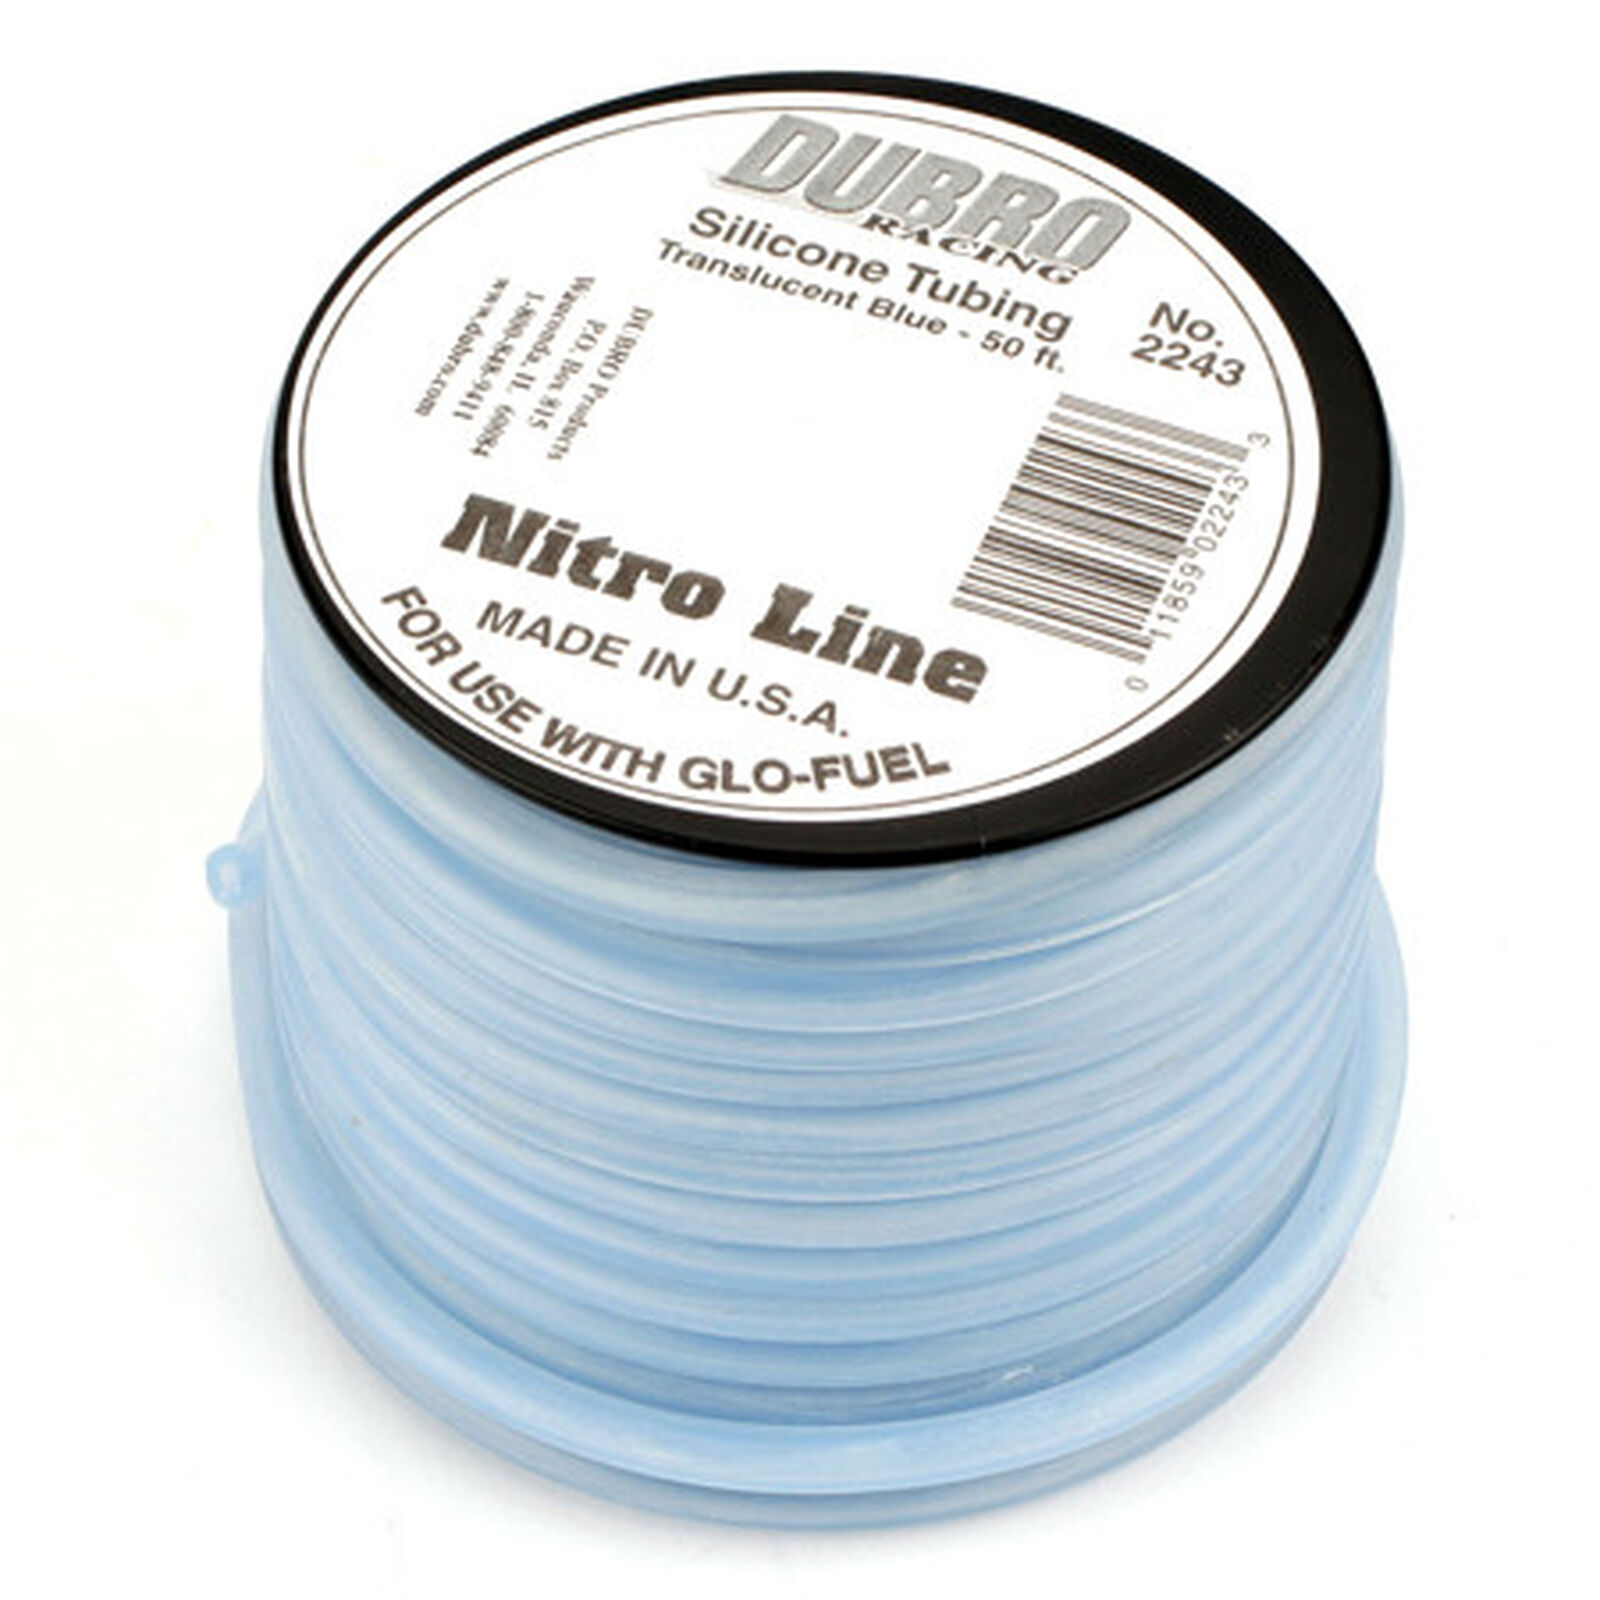 Silicone 50' Fuel Tubing, Blue